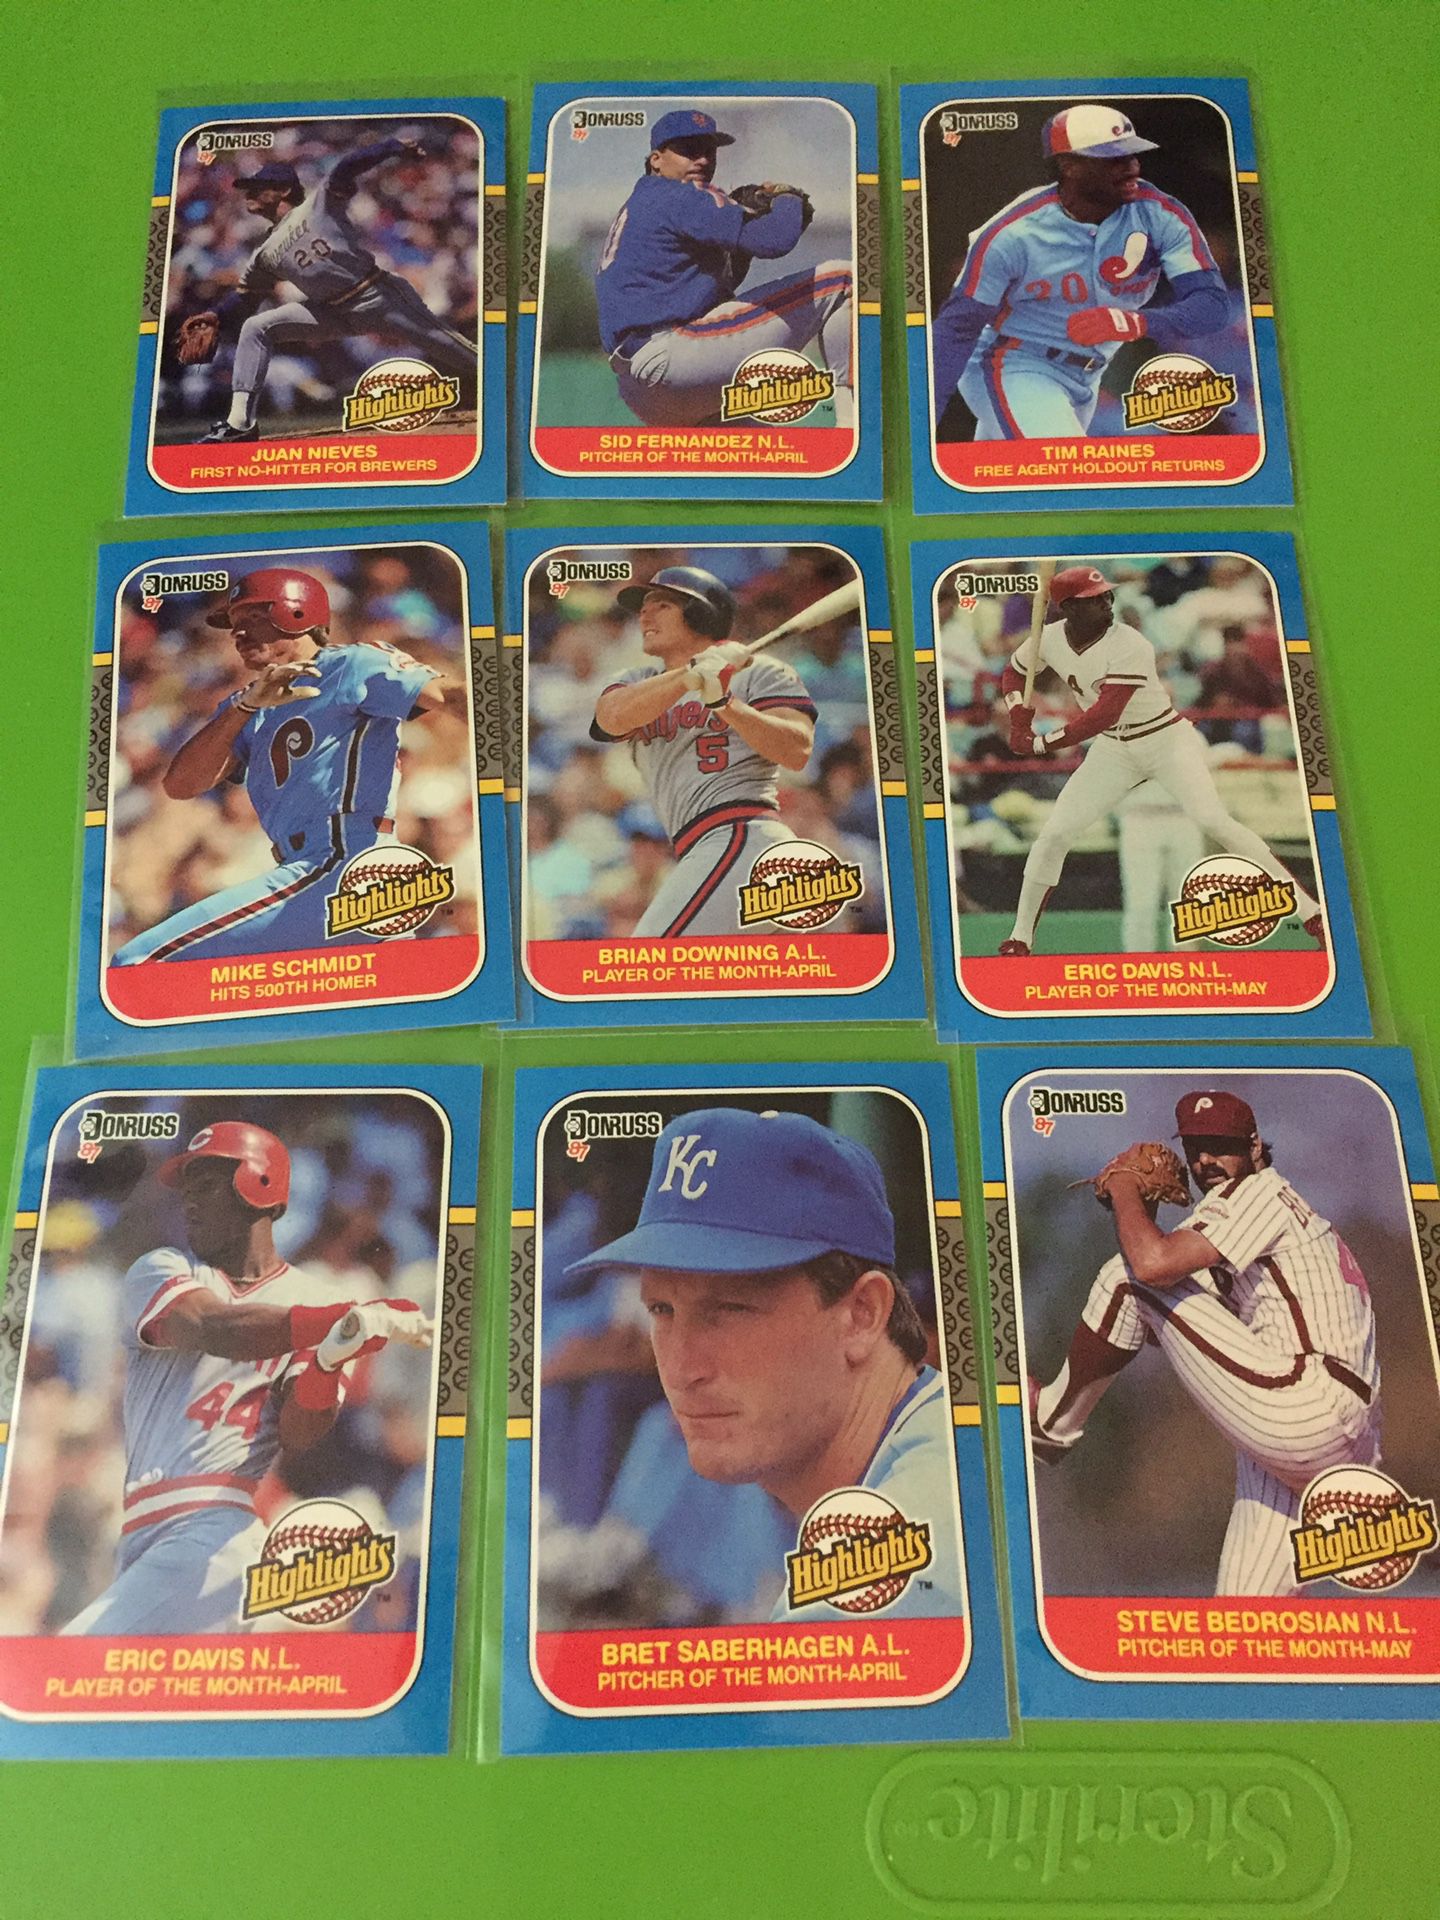 Baseball Card Pack #5 Highlights 1987 Cards